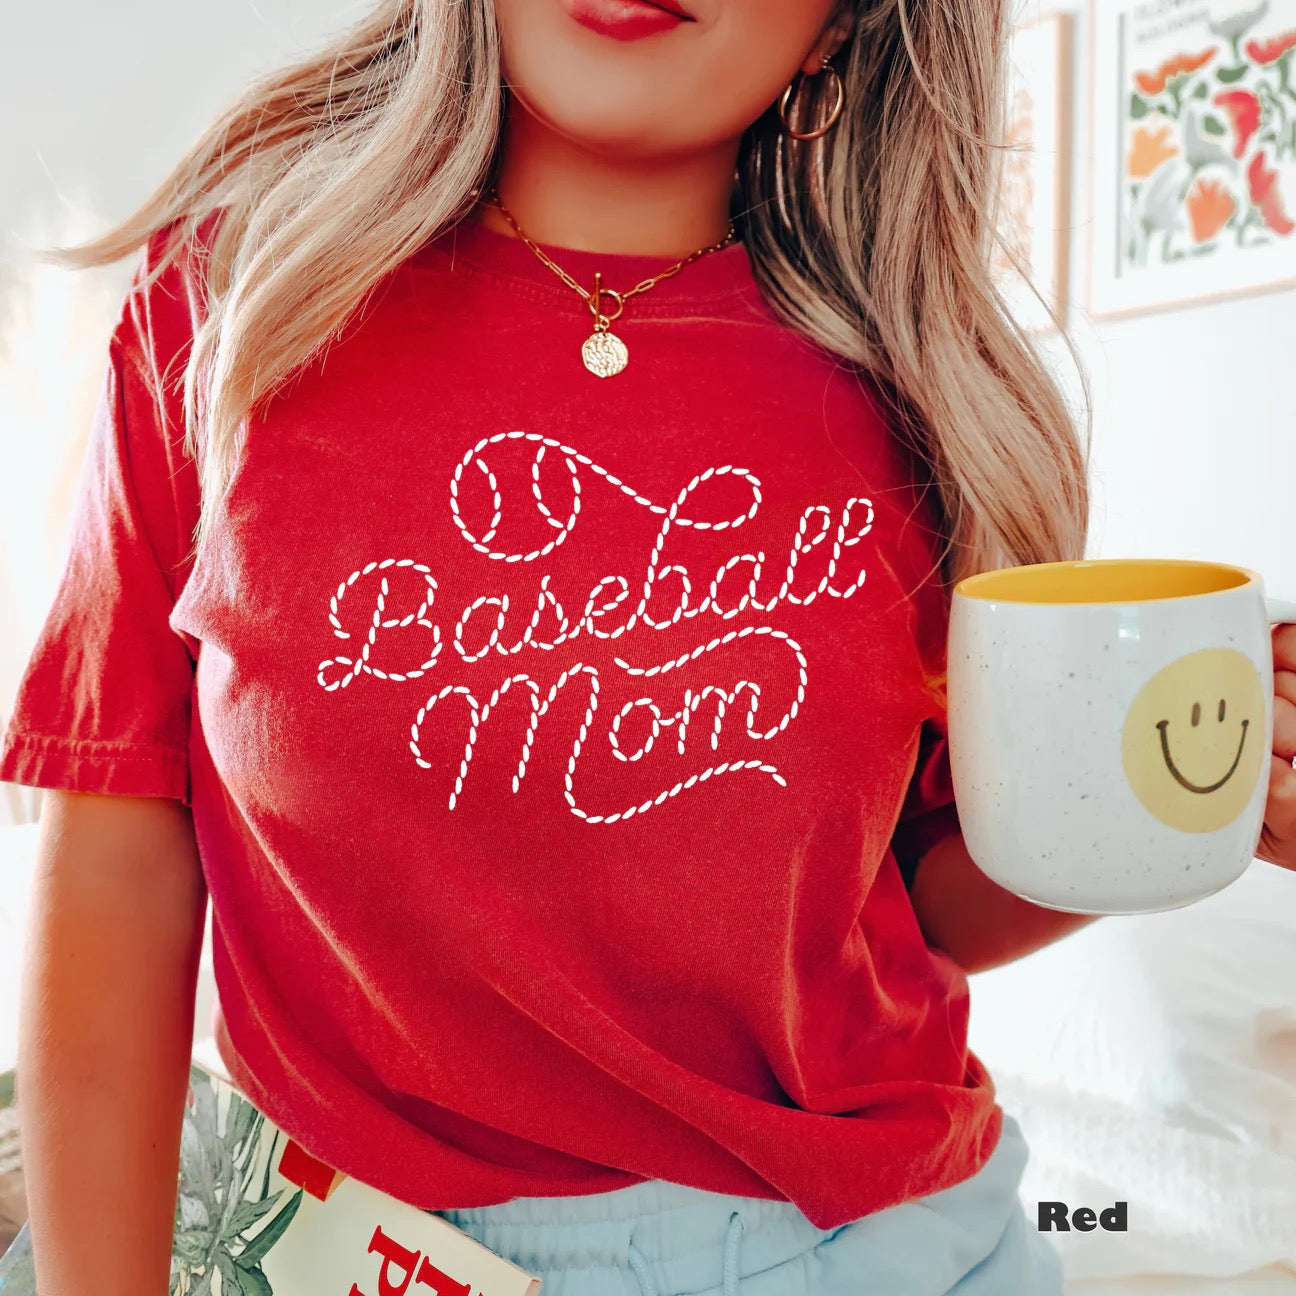 "Baseball Mom" T-shirt